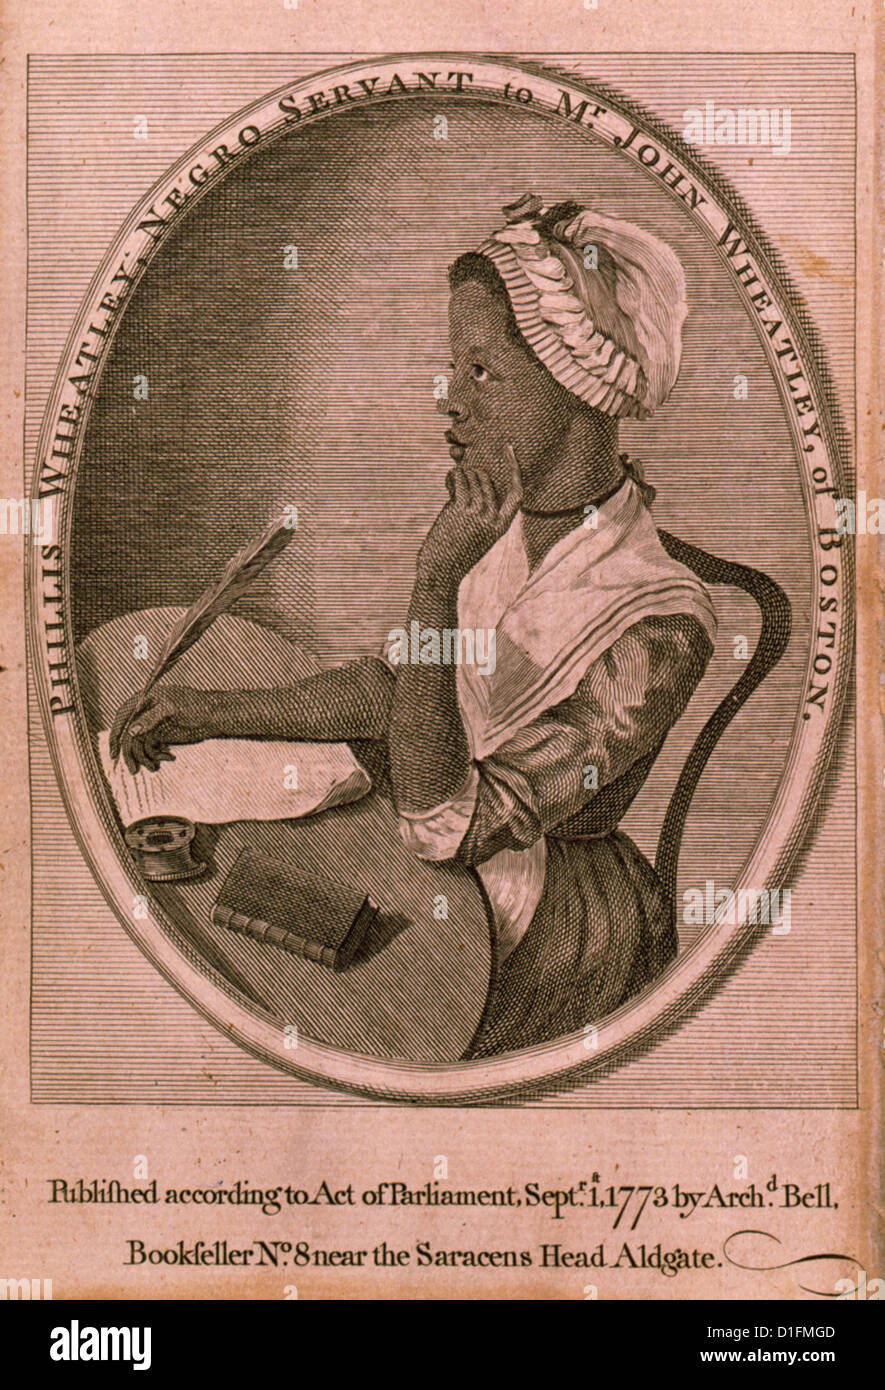 Phillis Wheatley, siervo al Sr. John Wheatley, de Boston. Publicado 1773 Foto de stock